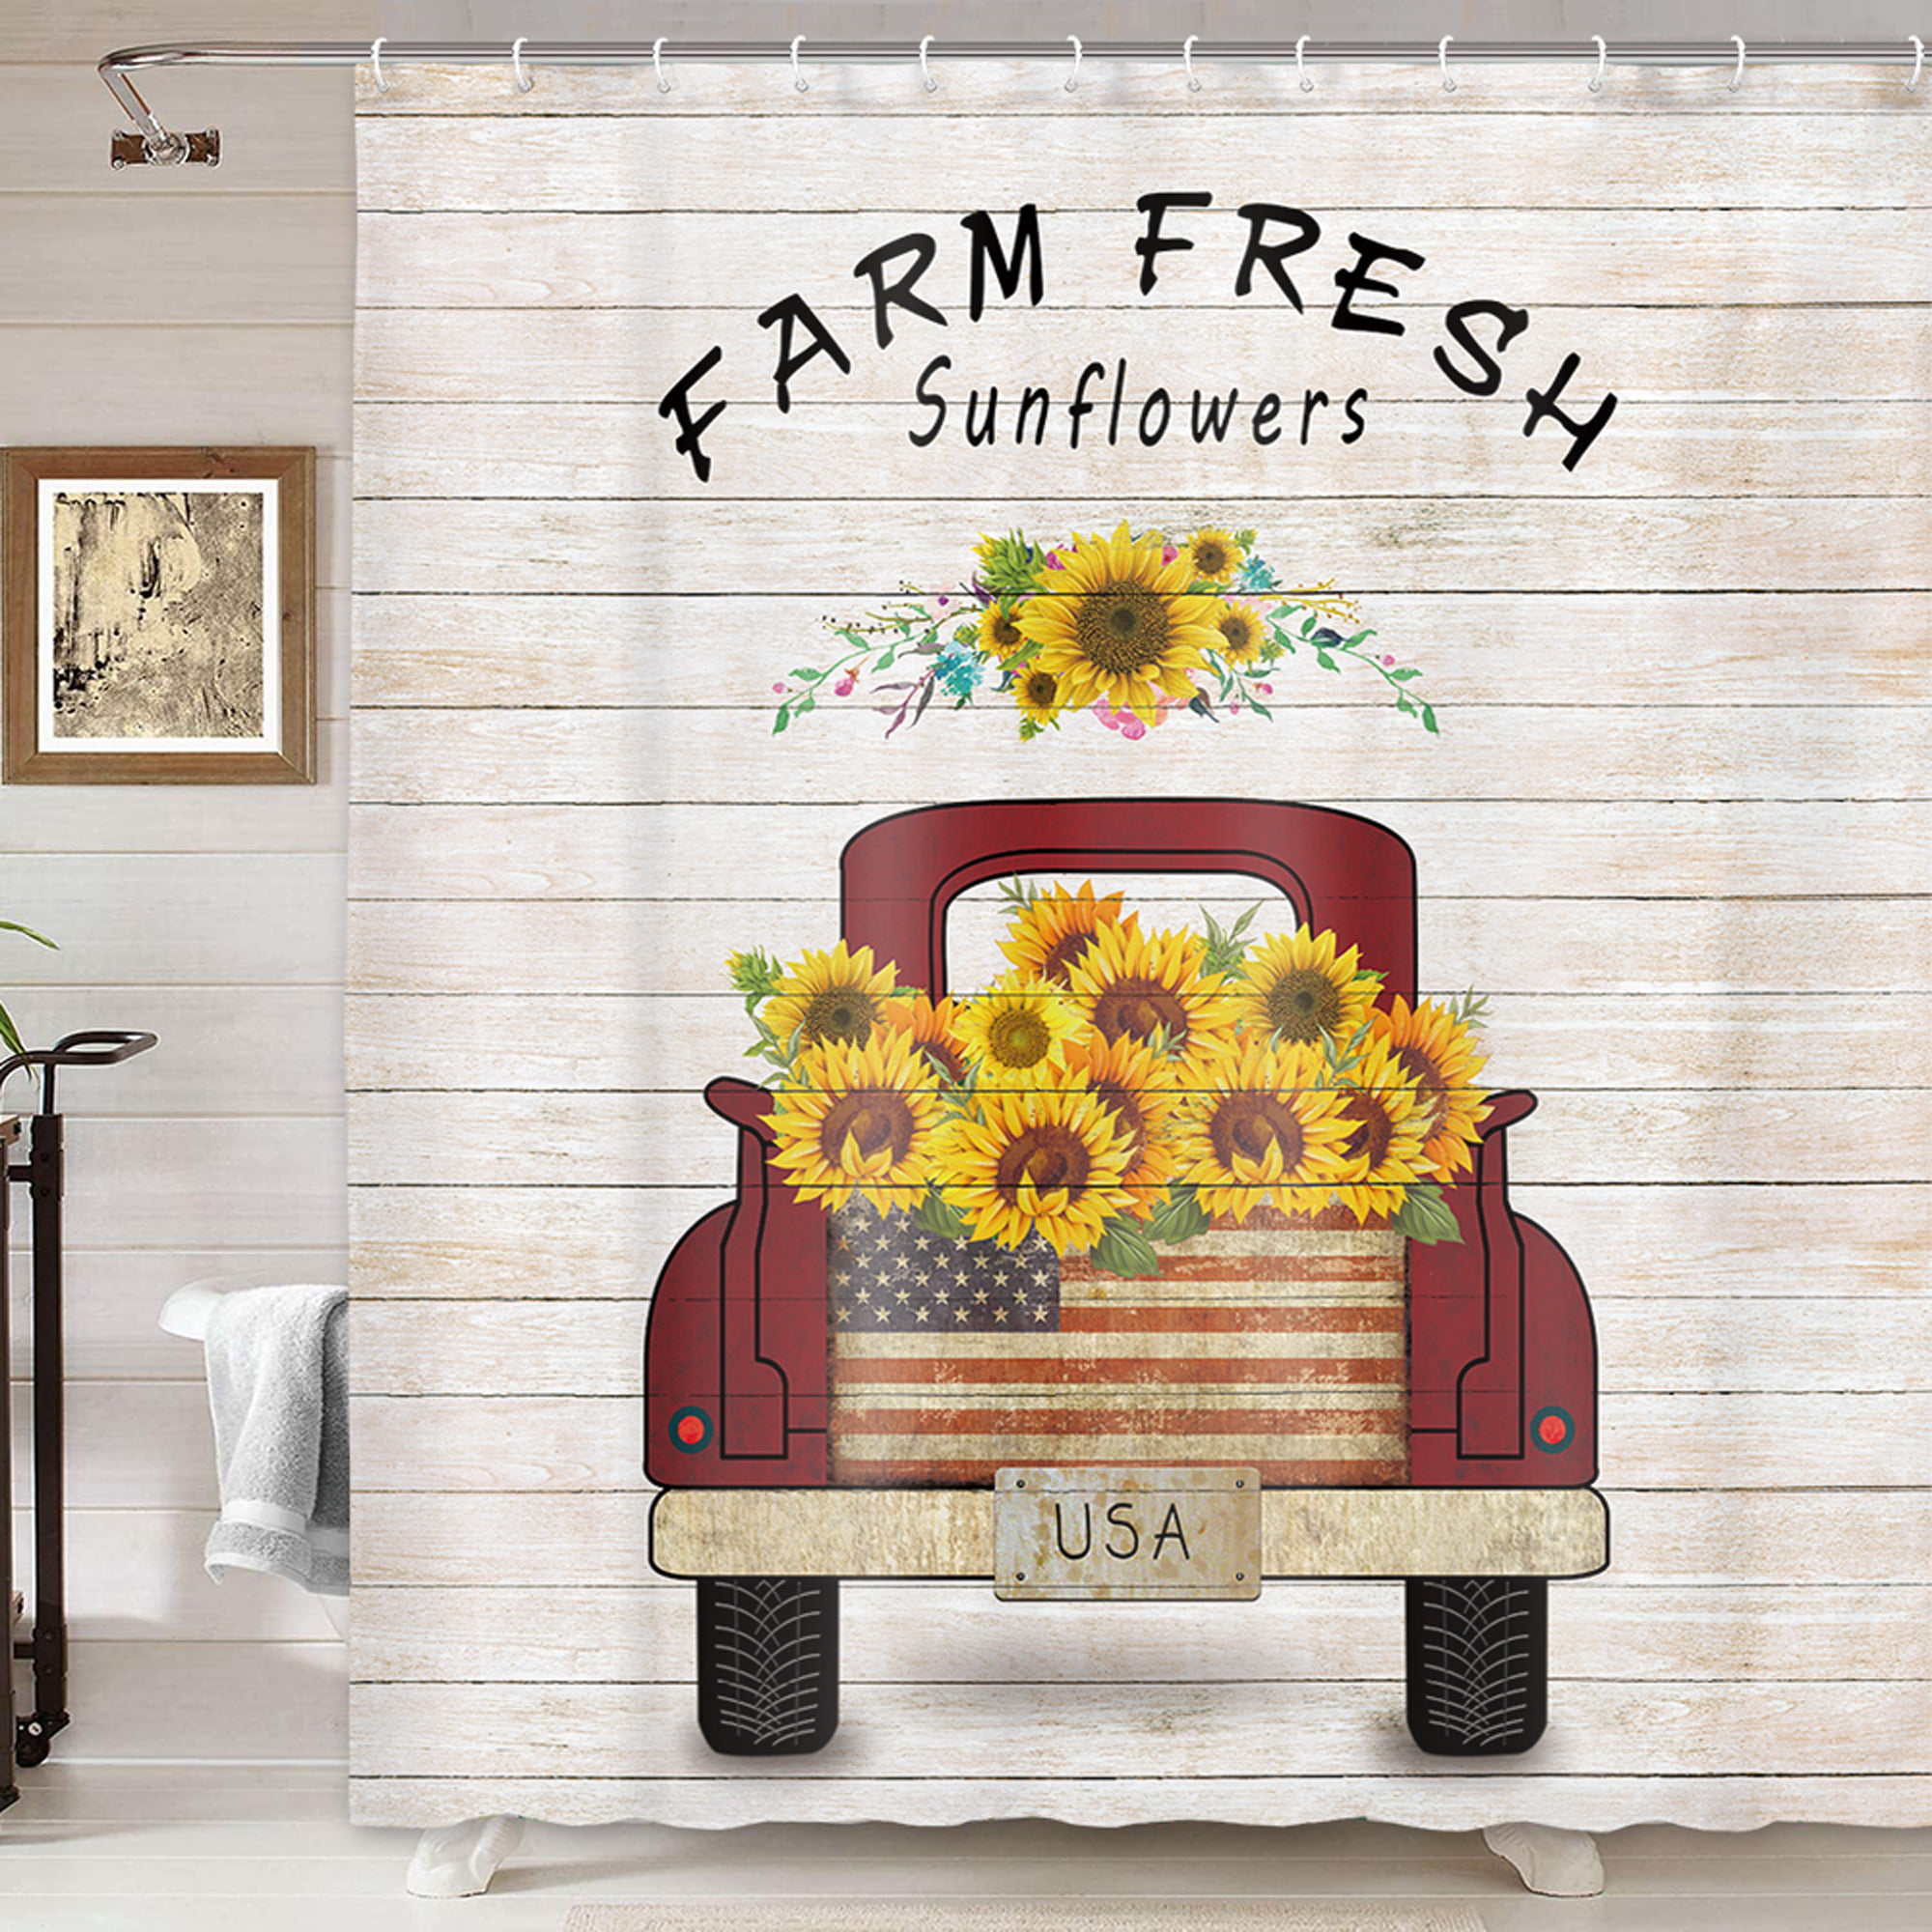 US Retro Rustic Wood Board Sunflowers Fabric Shower Curtain Liner Bathroom Decor 